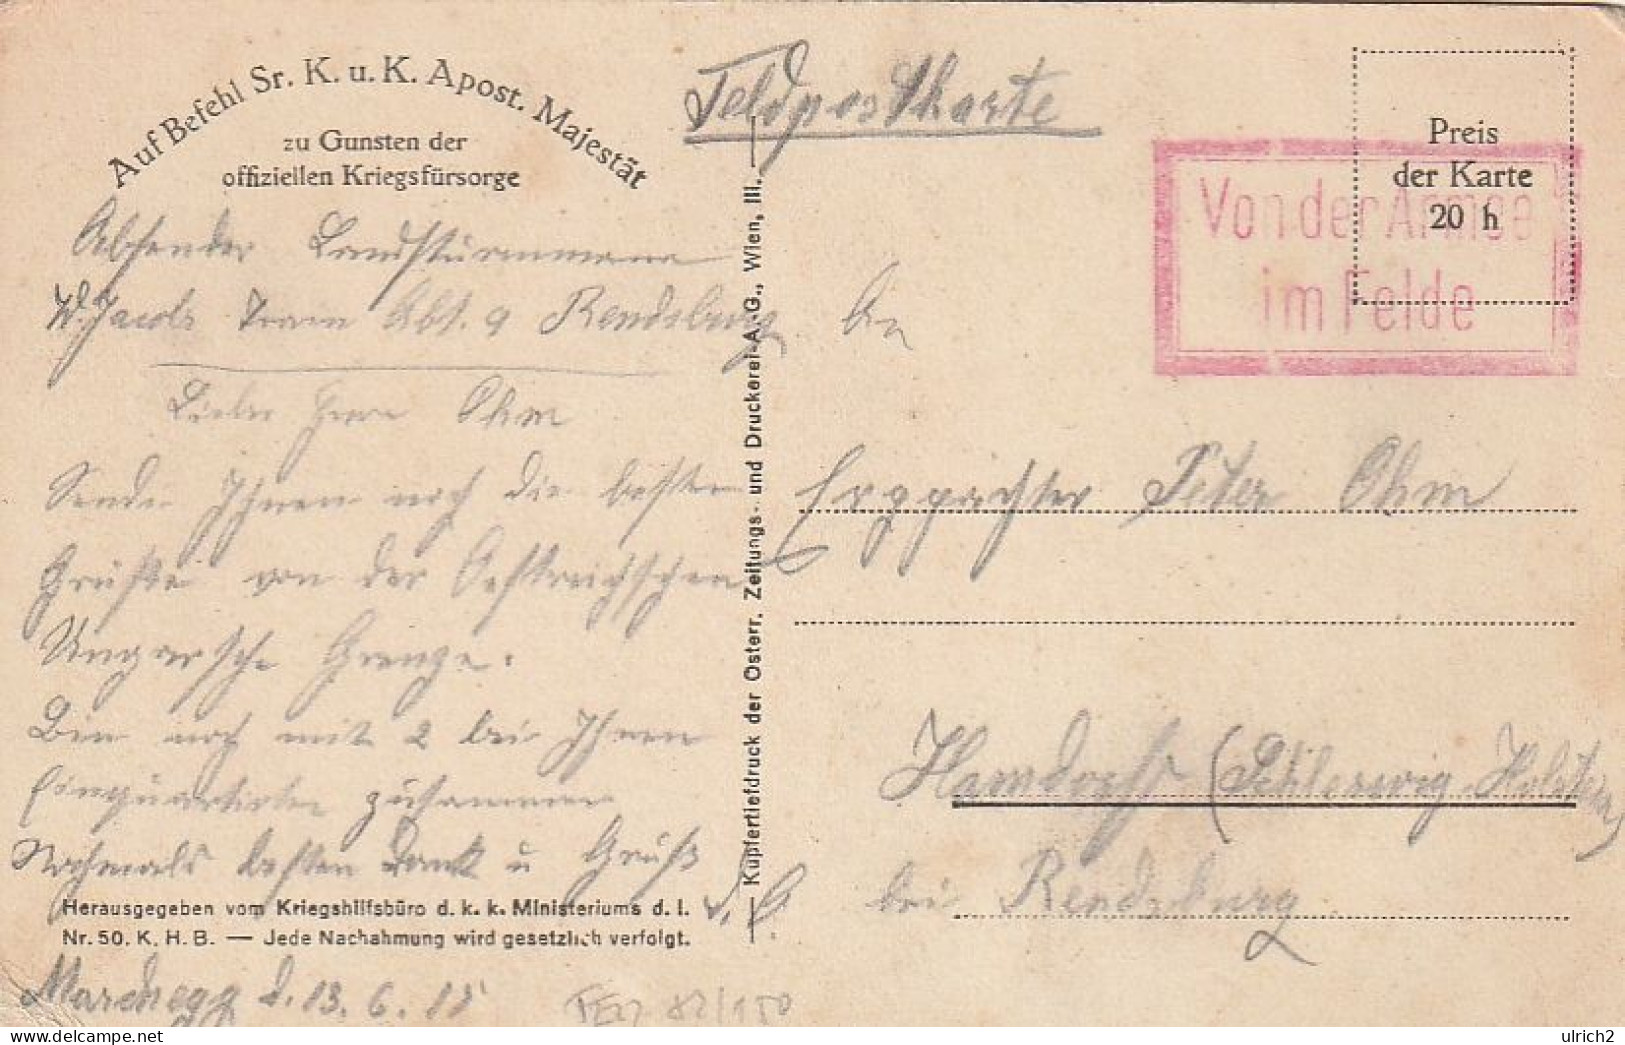 AK Kaiser Franz Josef I - Feldpost 1915 (69365) - Familles Royales